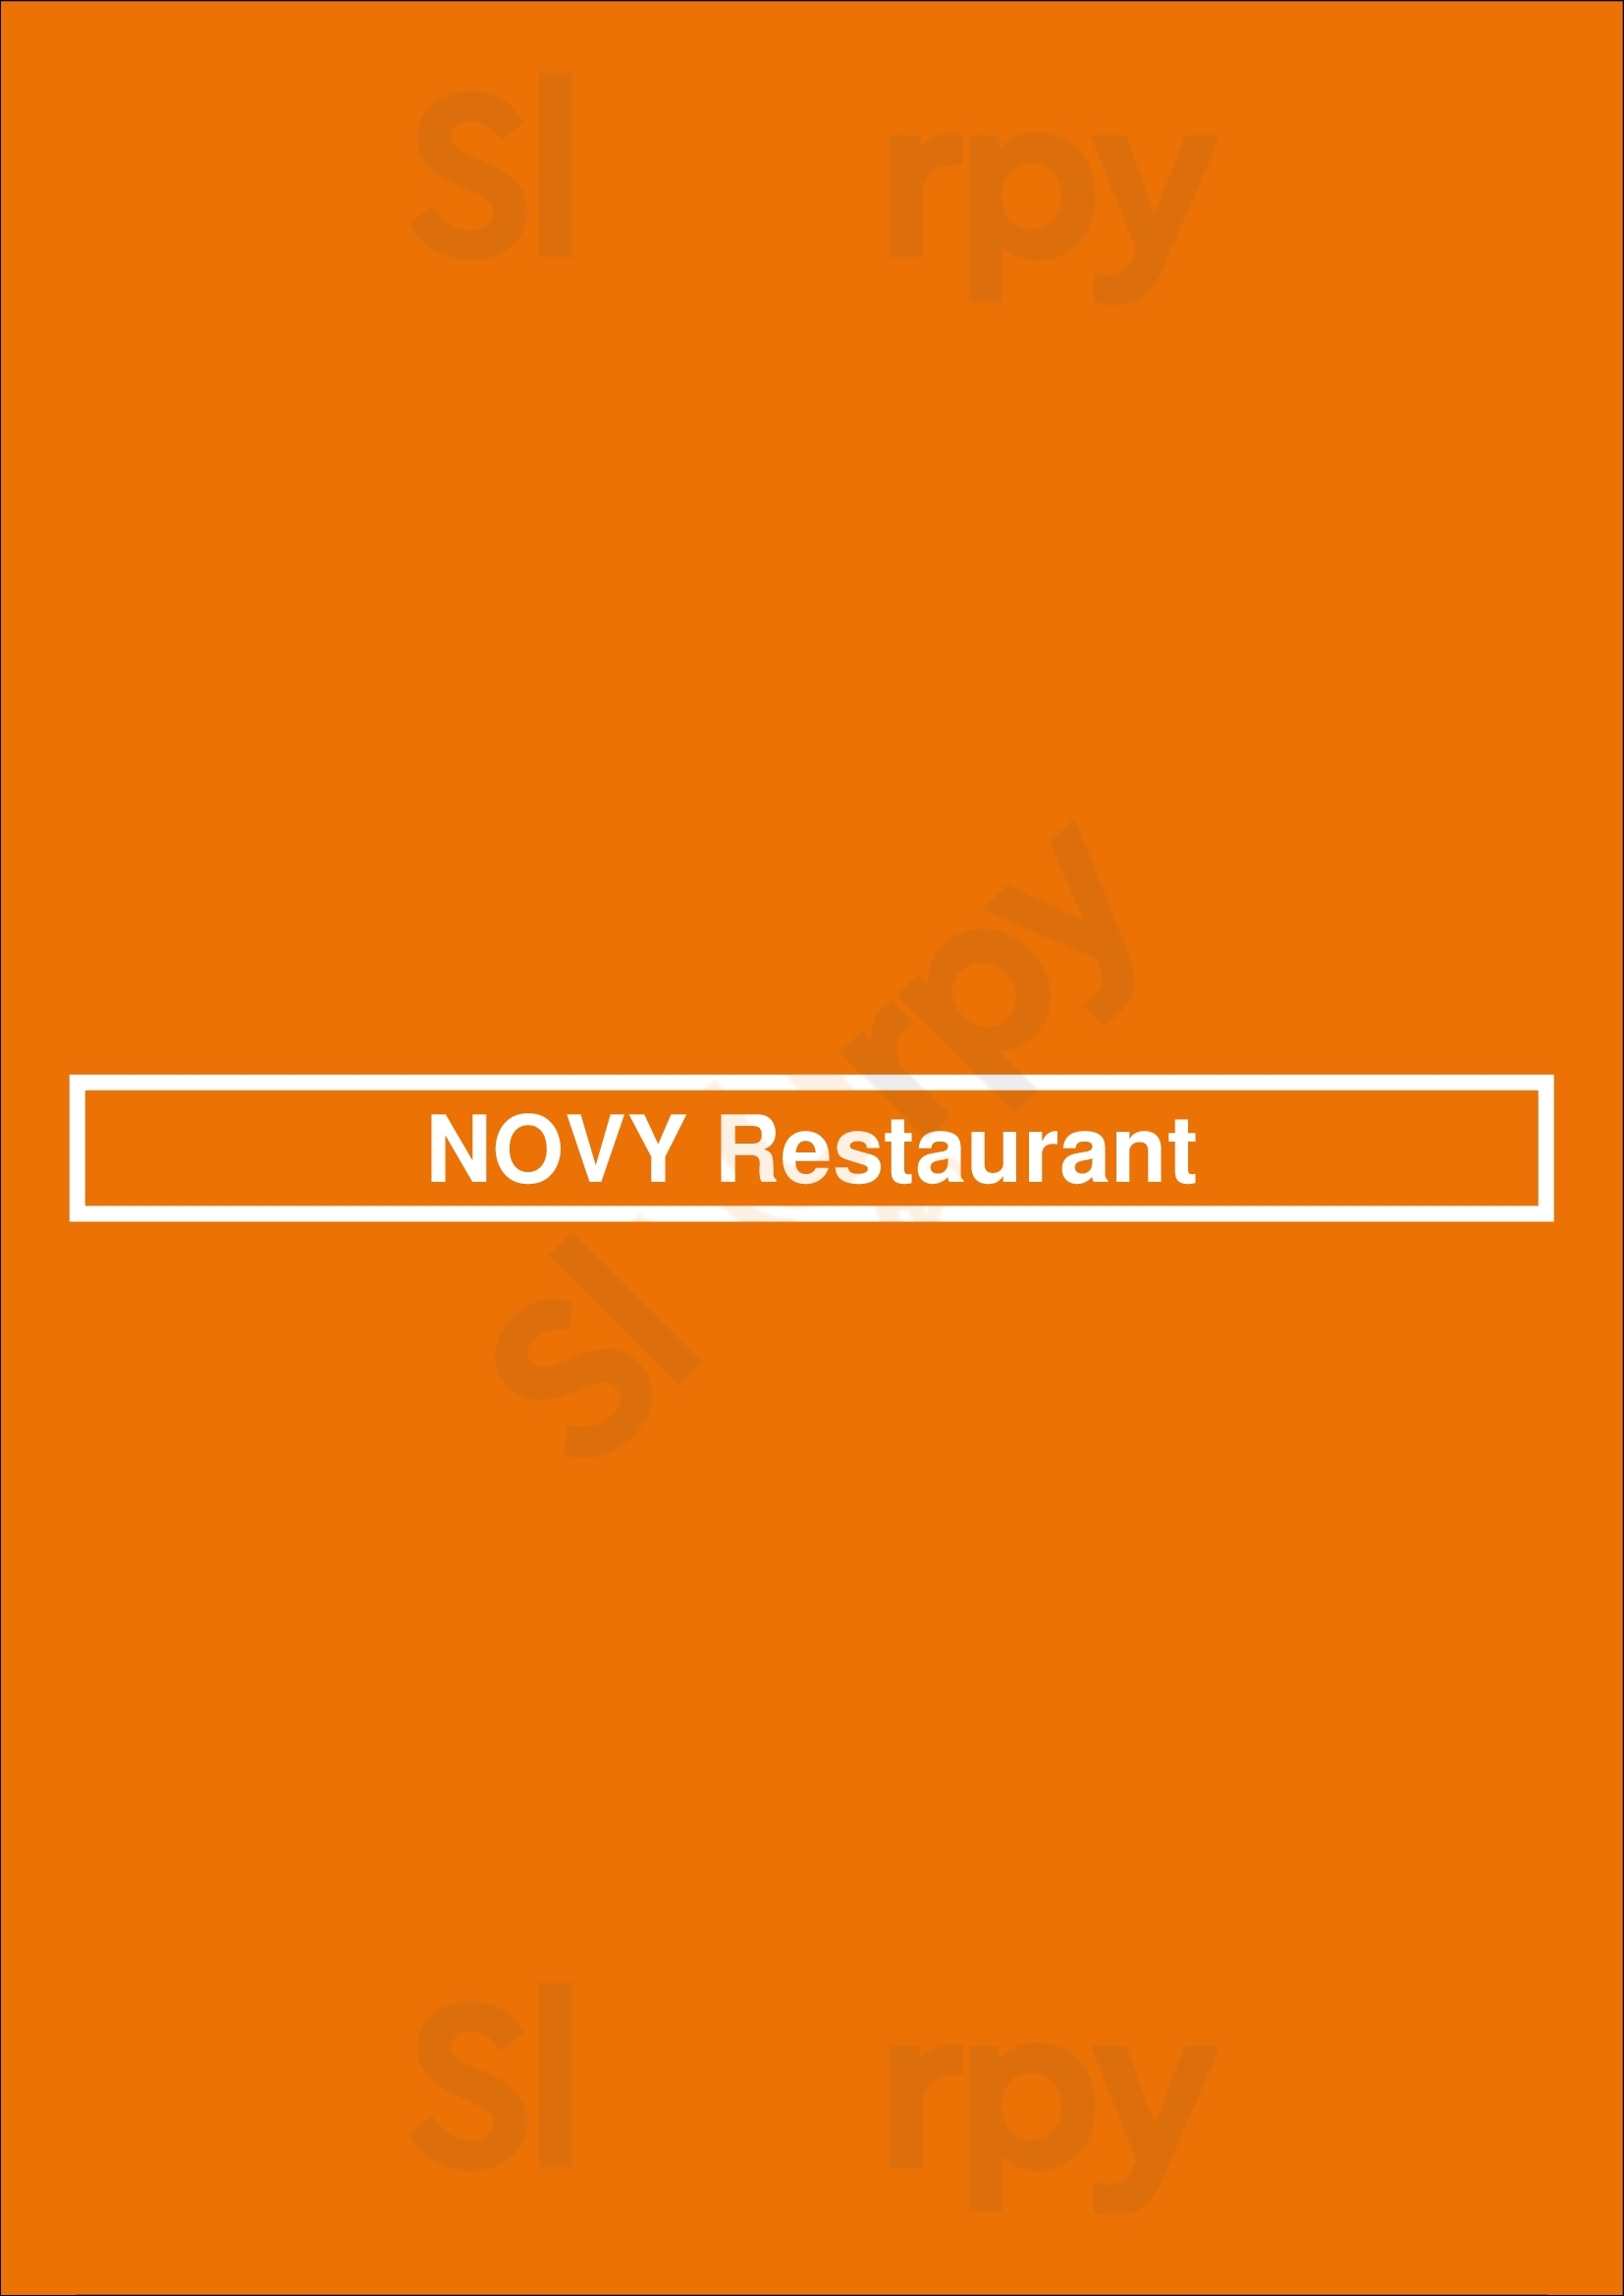 Novy Restaurant San Francisco Menu - 1